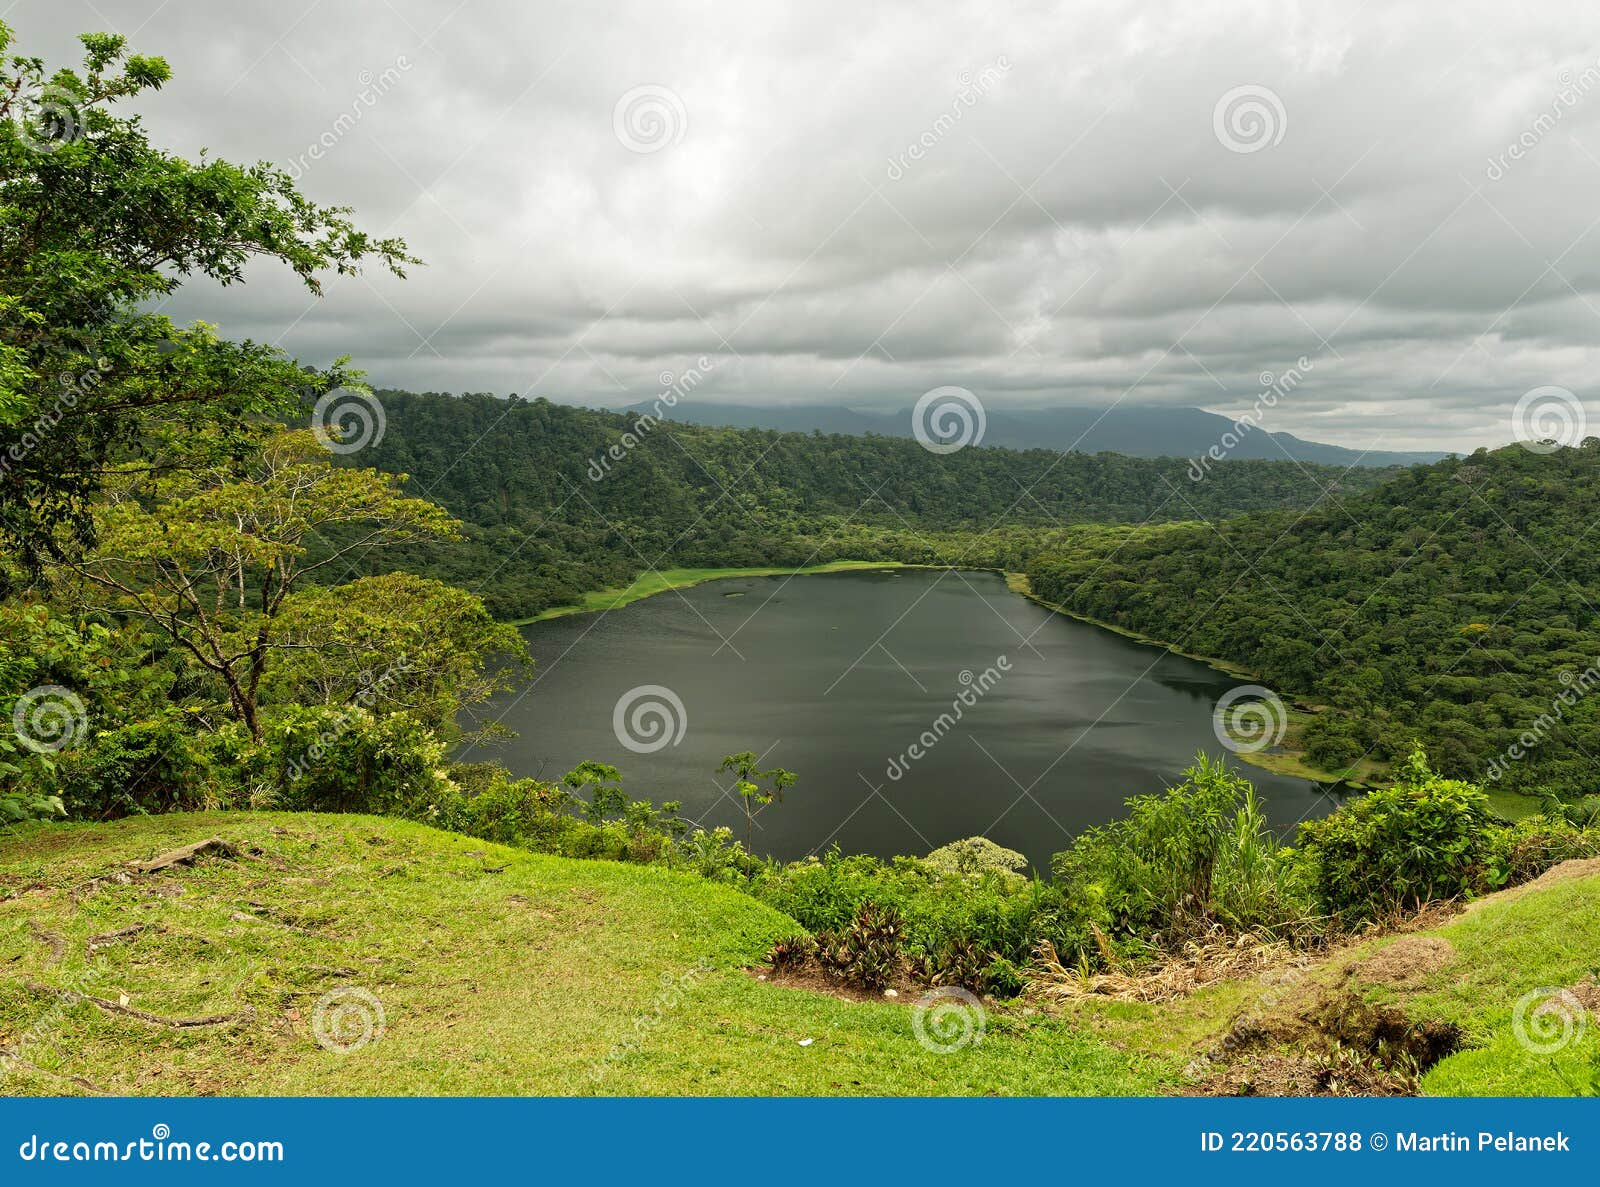 costa rica - laguna hule, volcano crater with the water lake and green rainforest, near arenal volcano, alajuela, rio cuarto,